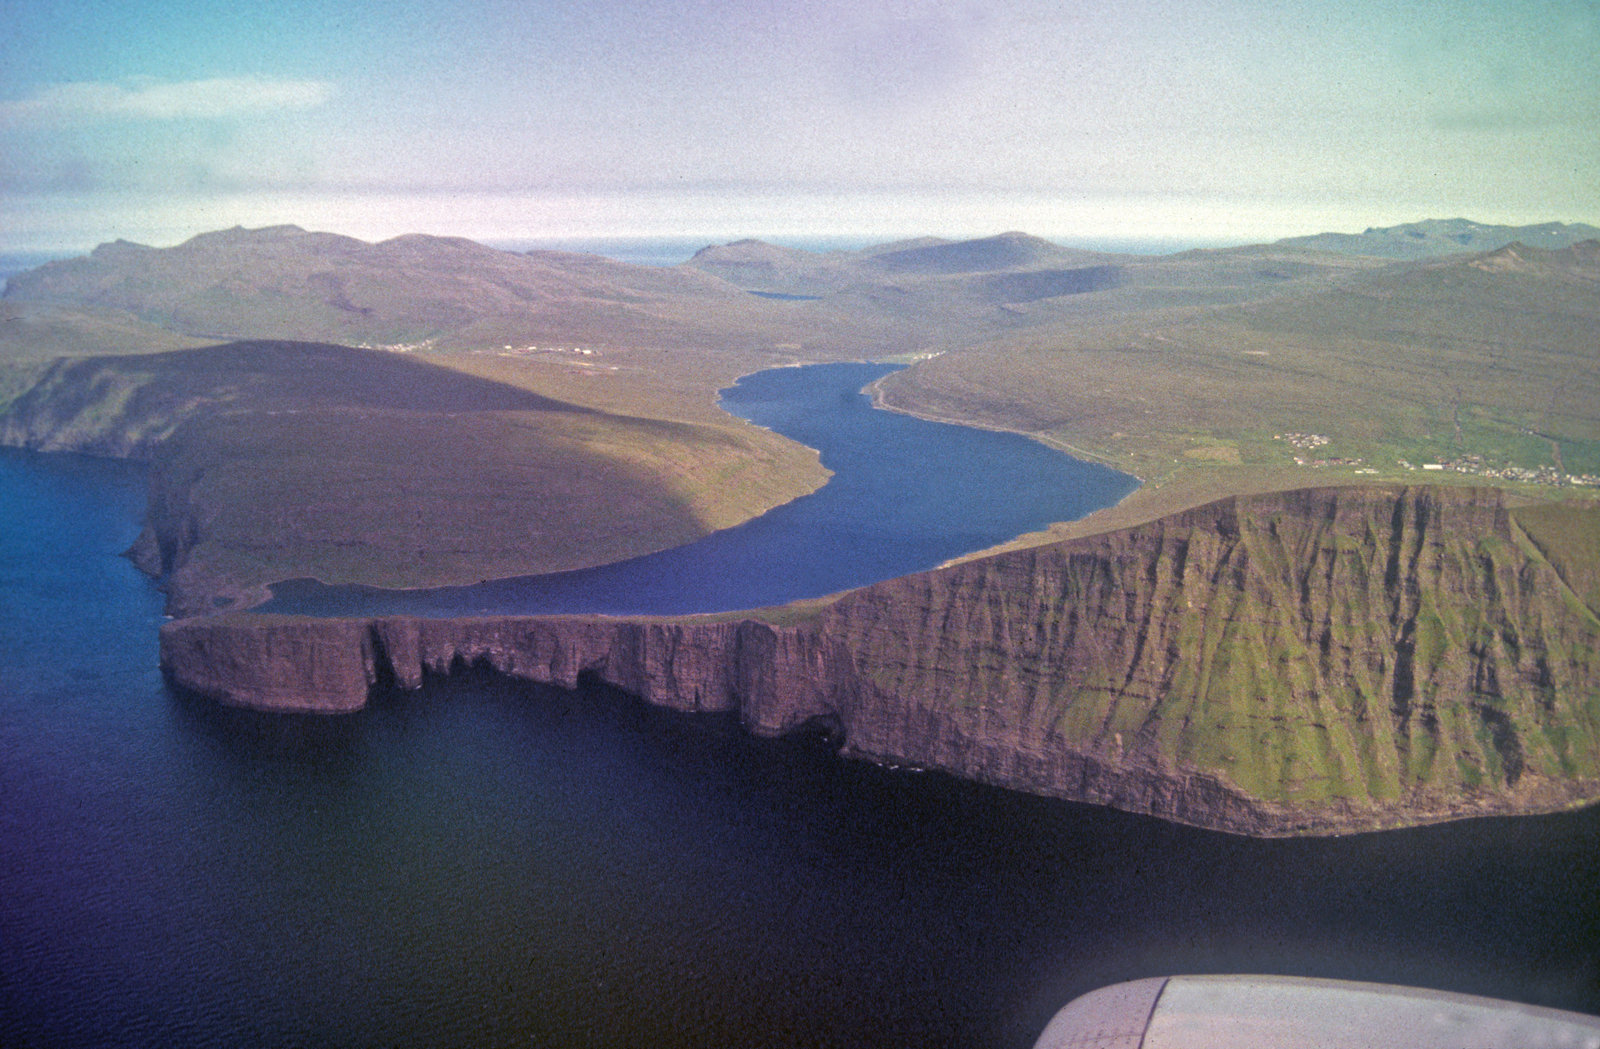 Озеро над океаном сорвагсватн на фарерских островах